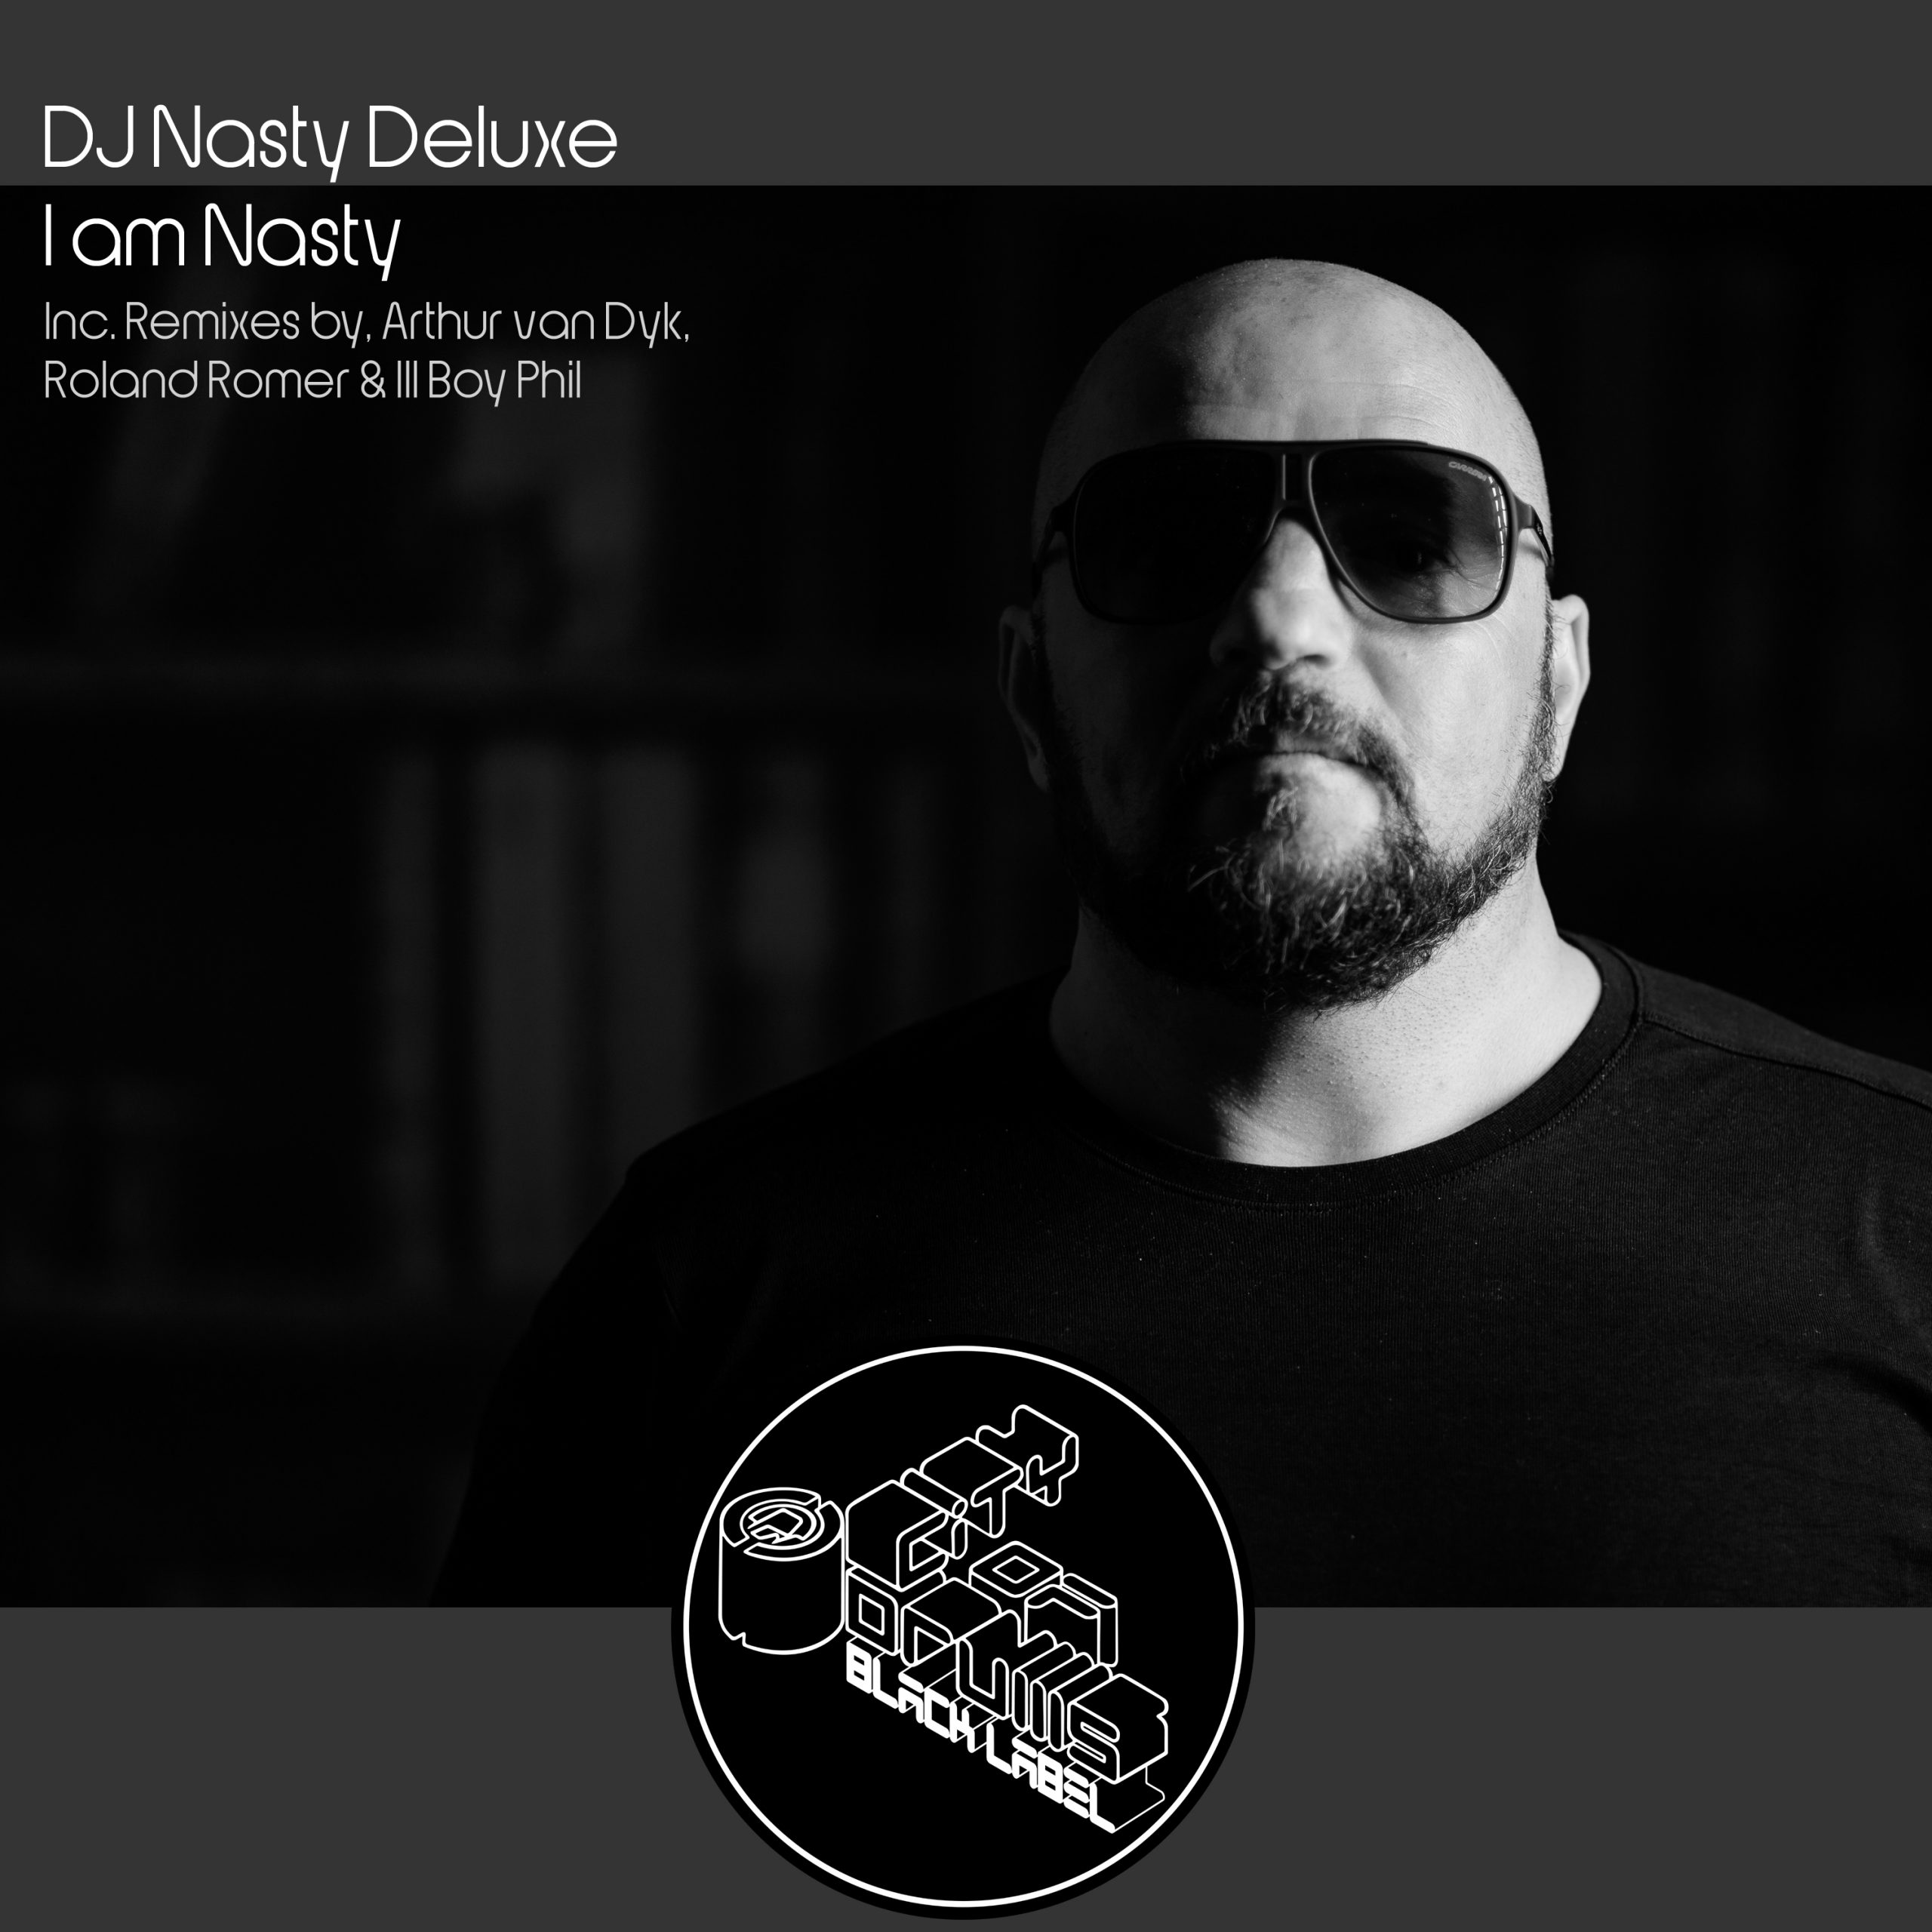 OUT NOW!!! I am Nasty von DJ Nasty Deluxe! 17